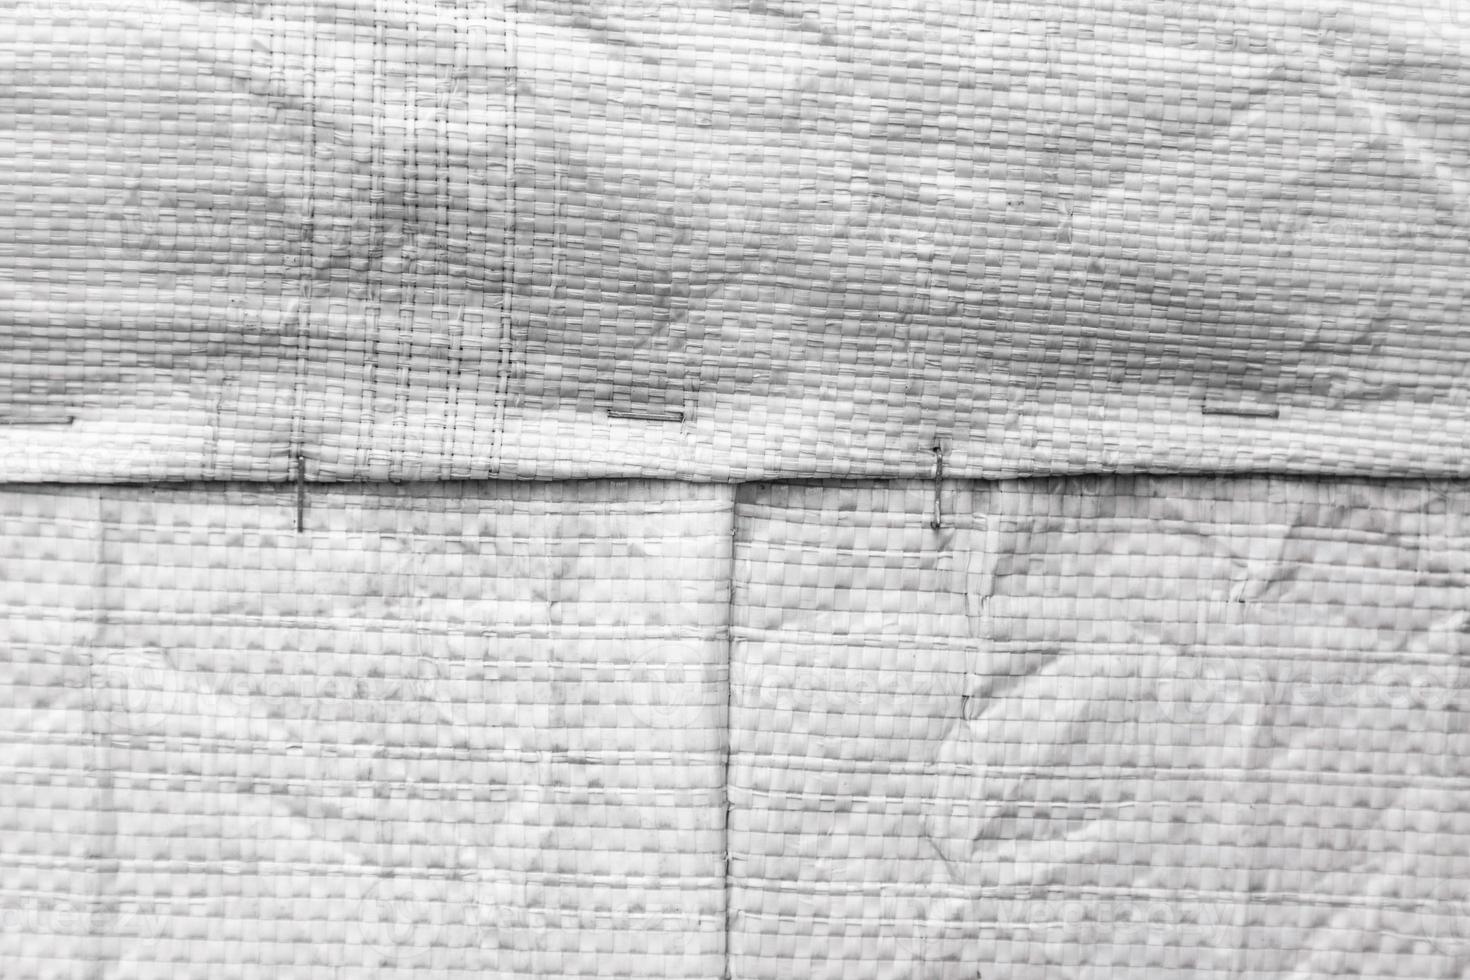 Bolsa de yute o arpillera textura de fondo horizontal foto